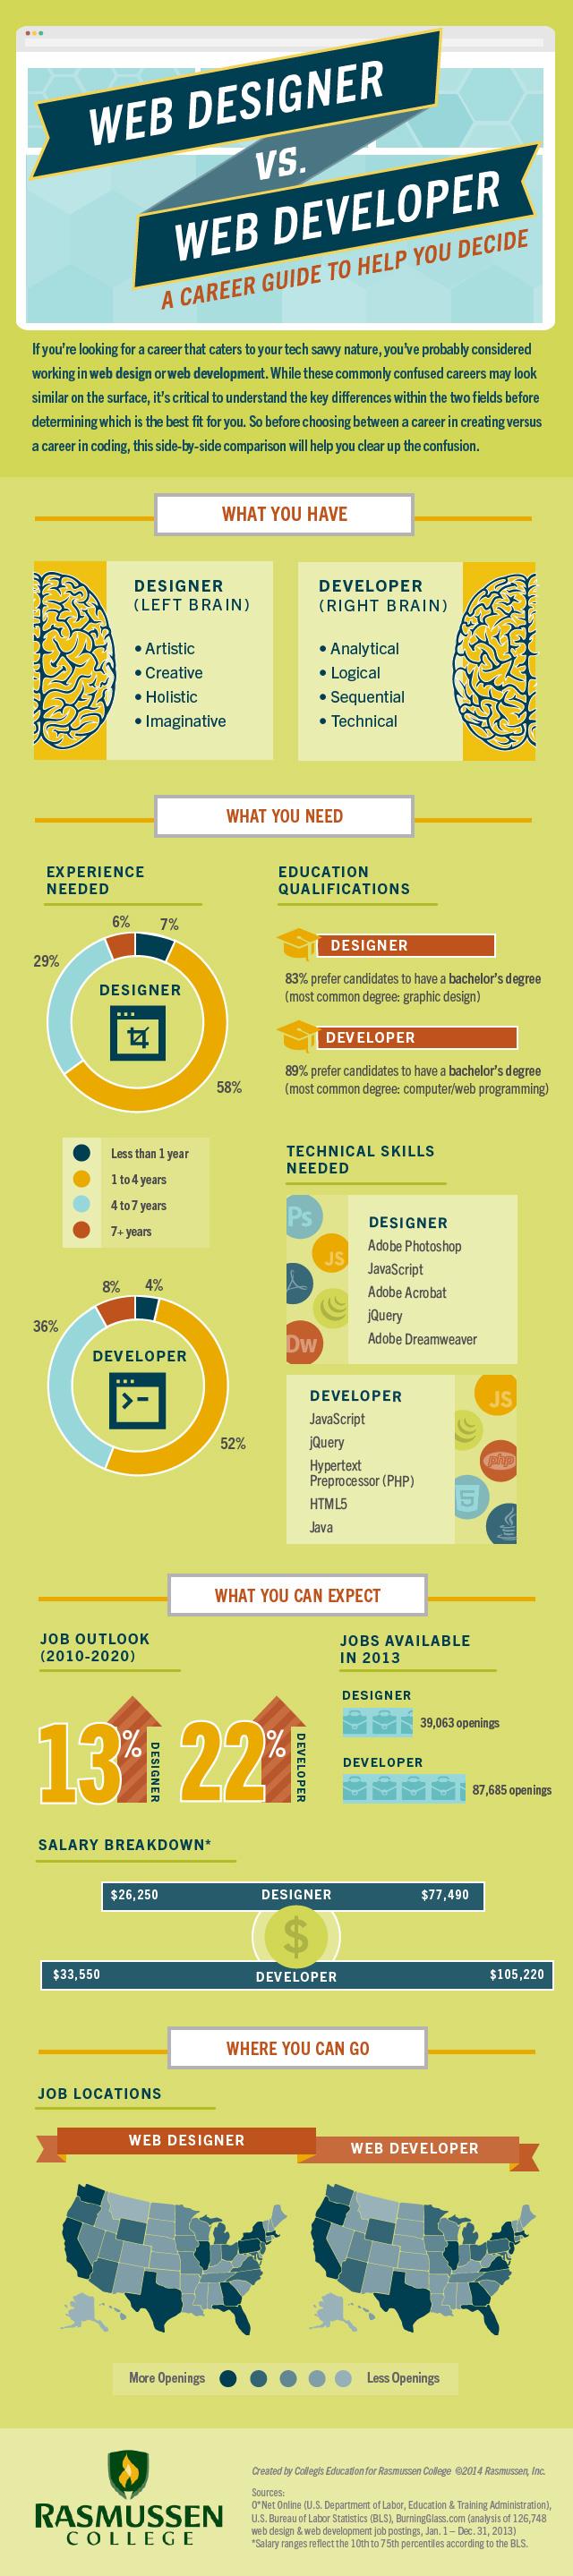 web designer versus web developer infographic